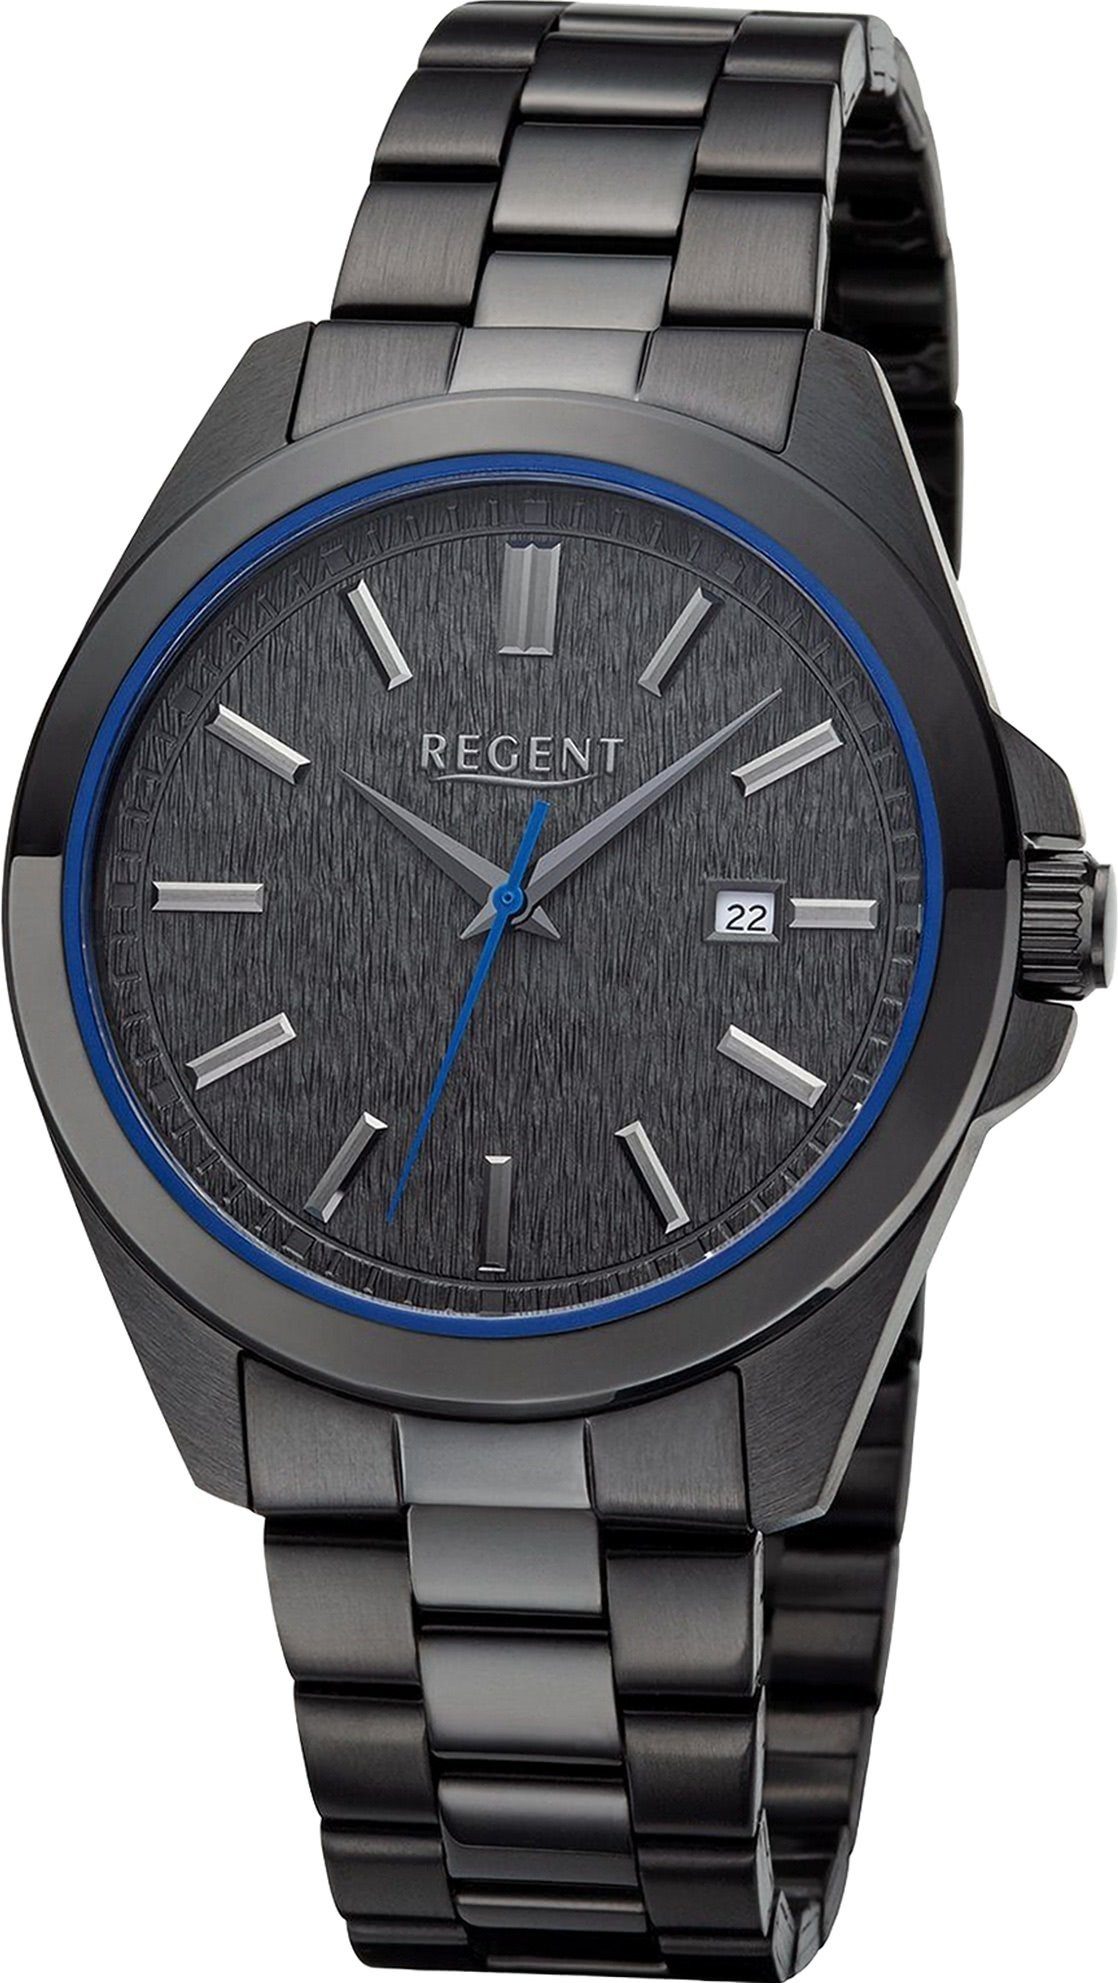 rund, Armbanduhr Herren Armbanduhr (ca. blau groß Quarzuhr Herren Analog, 41mm), Metallarmband Regent Regent extra